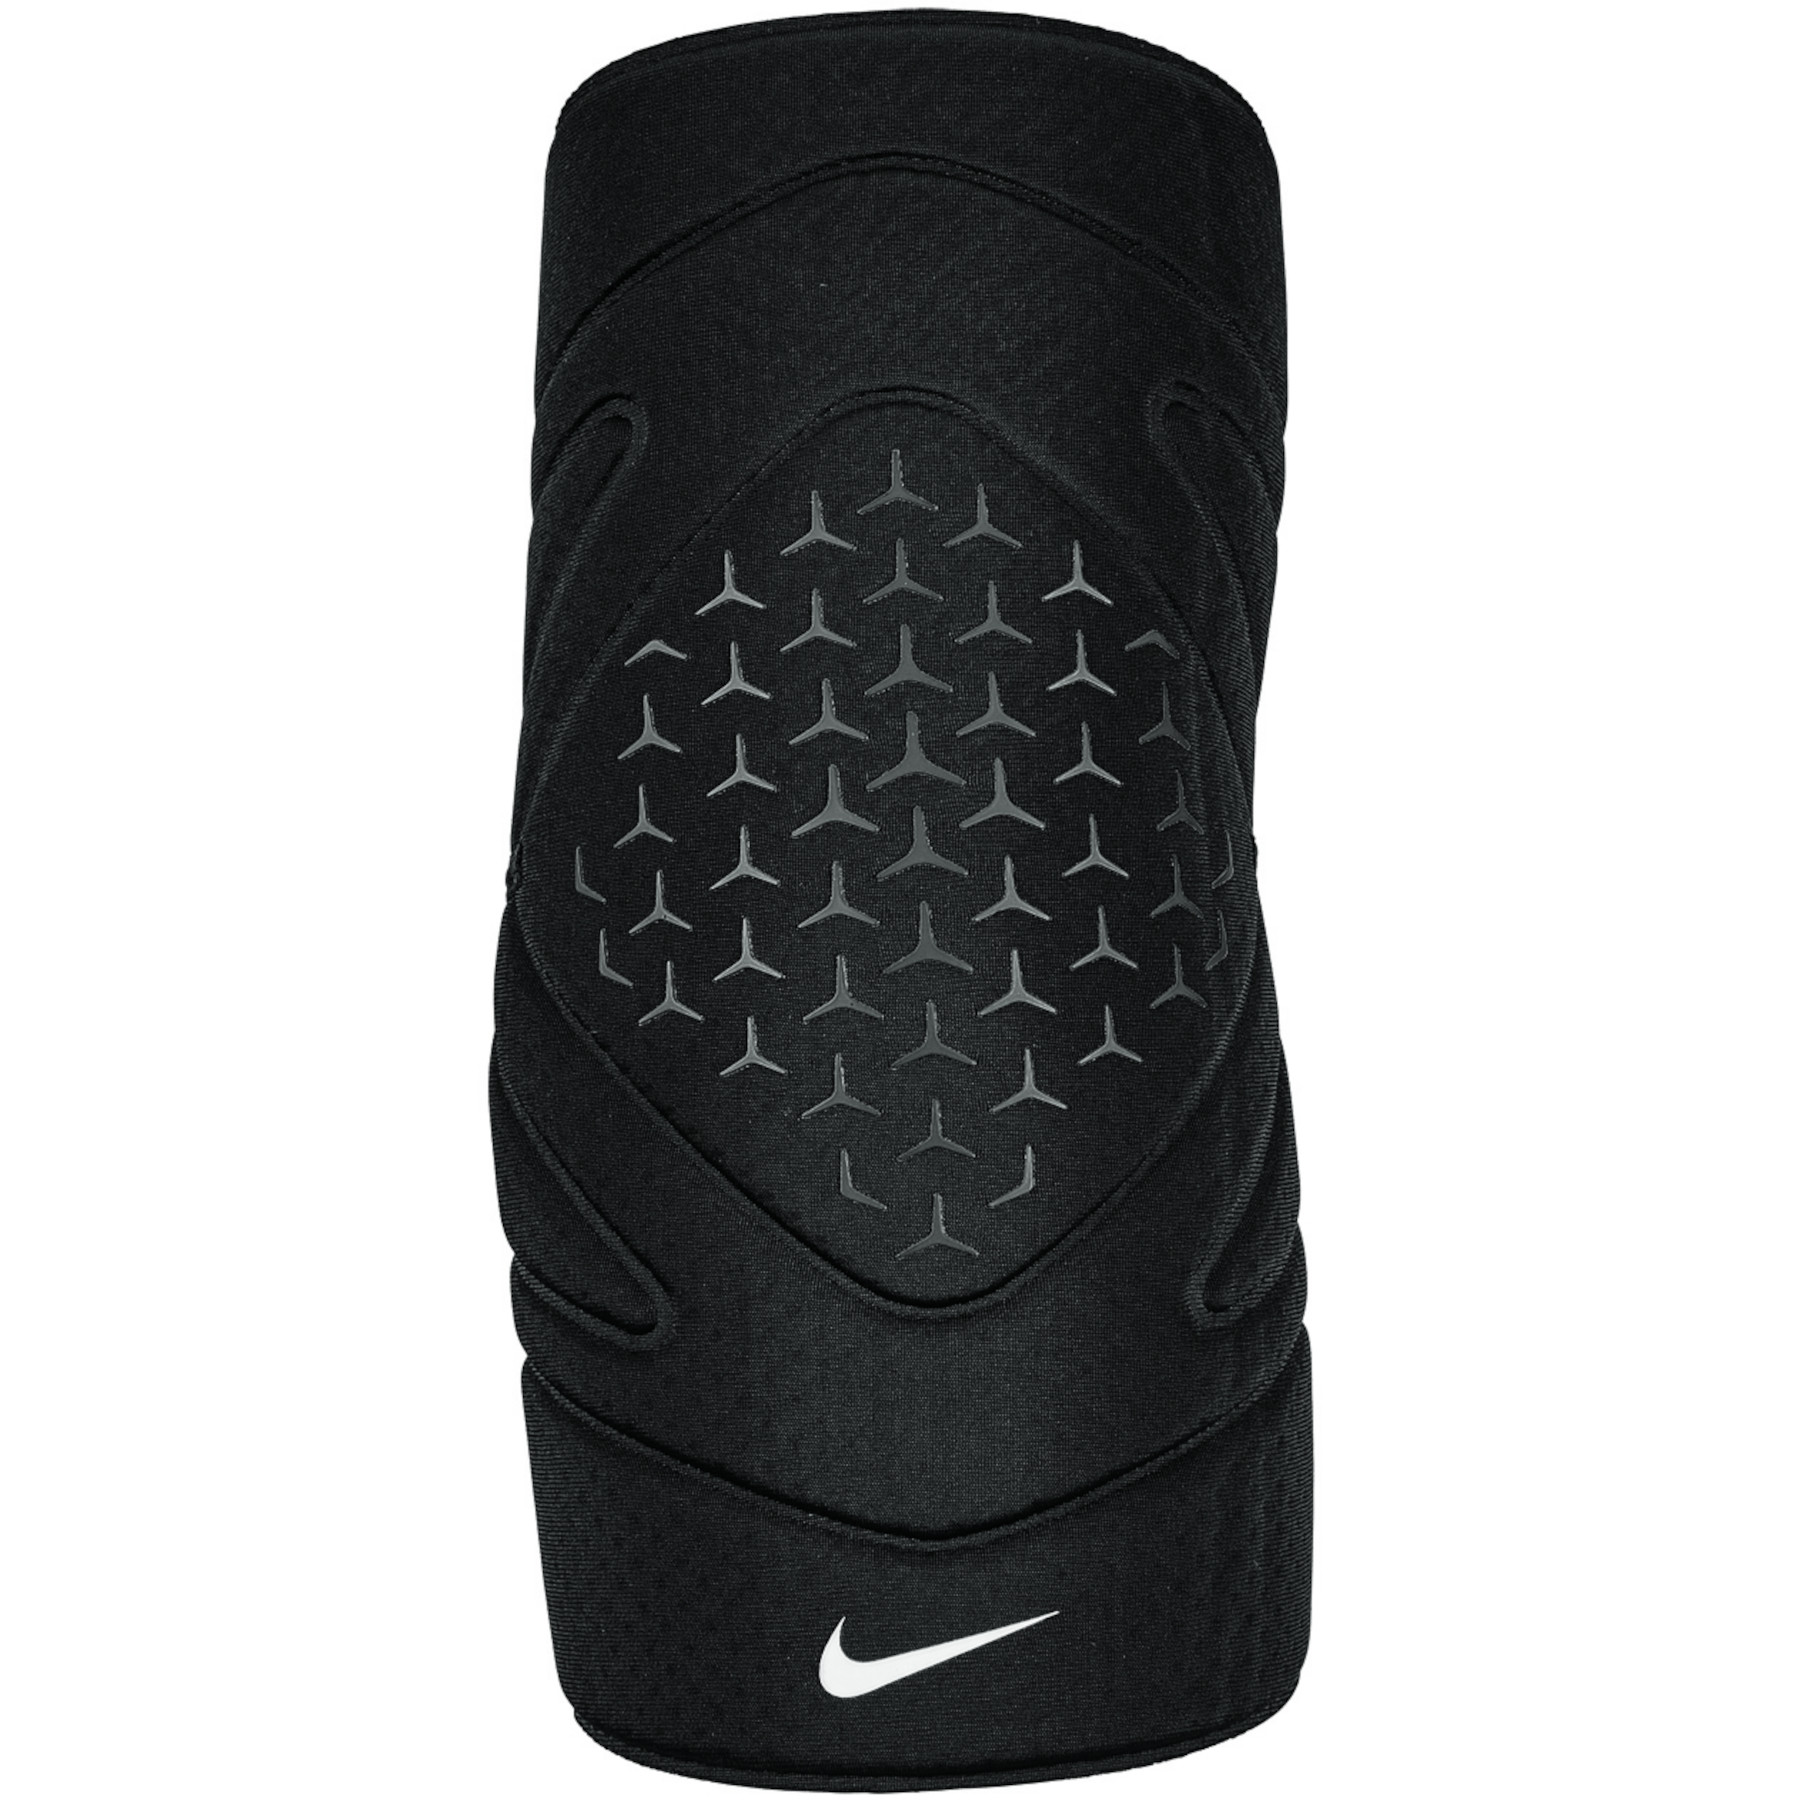 Bild von Nike Pro Elbow Sleeve 3.0 Ellbogenbandage - black/white 010